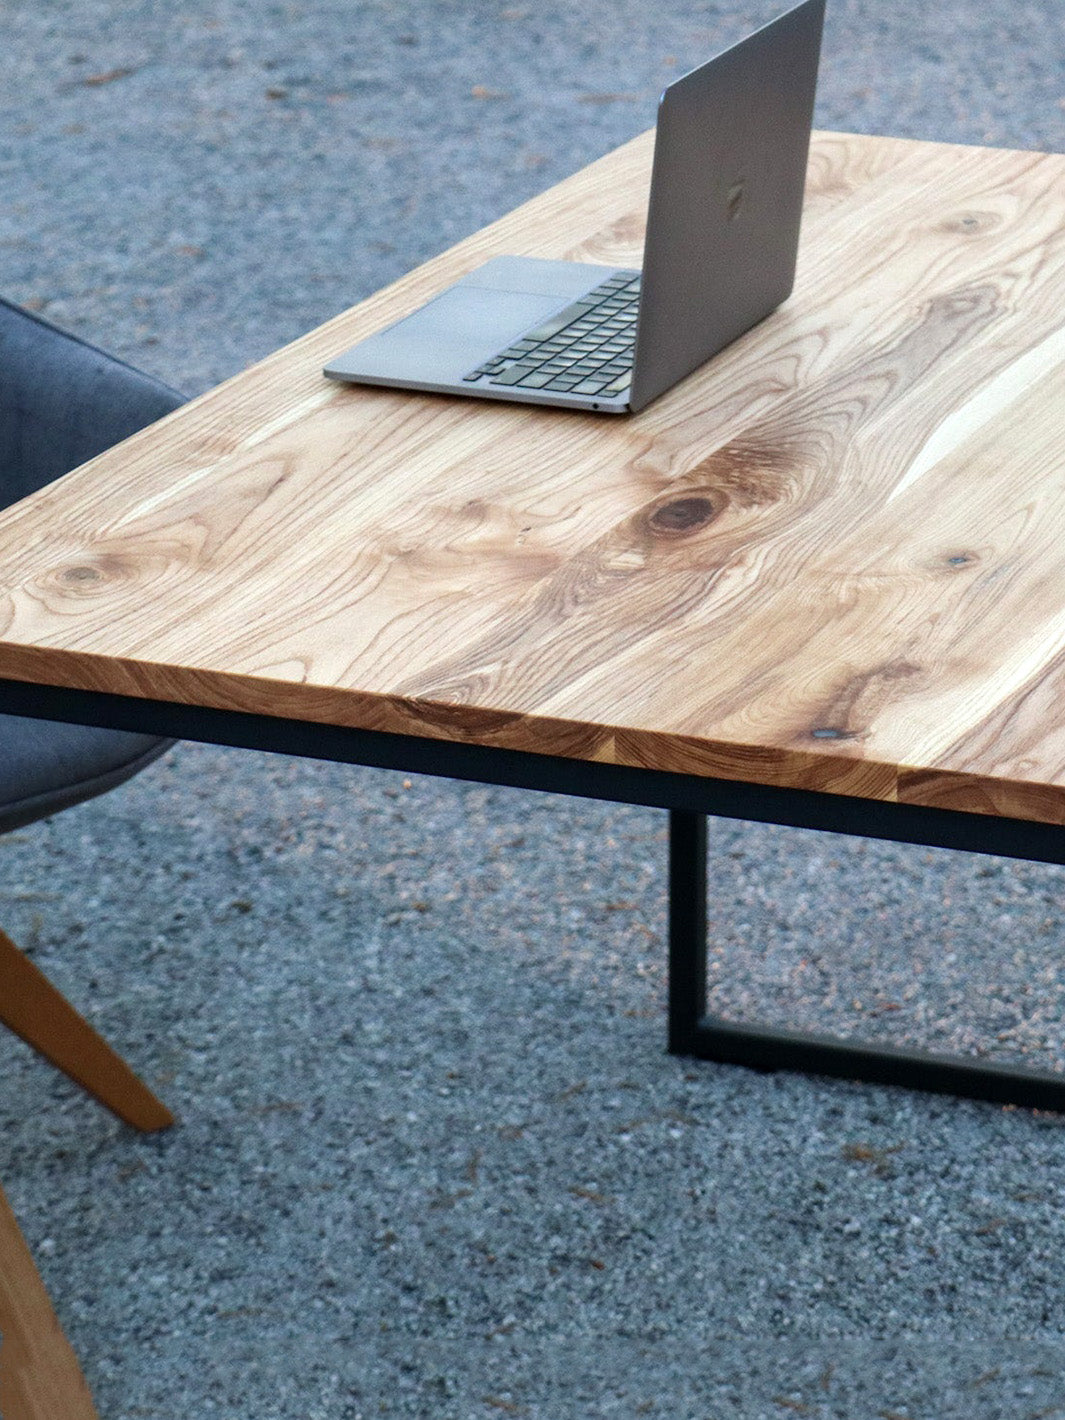 Modern Minimalist Ash Wood & Metal Drafting Writing Desk Table